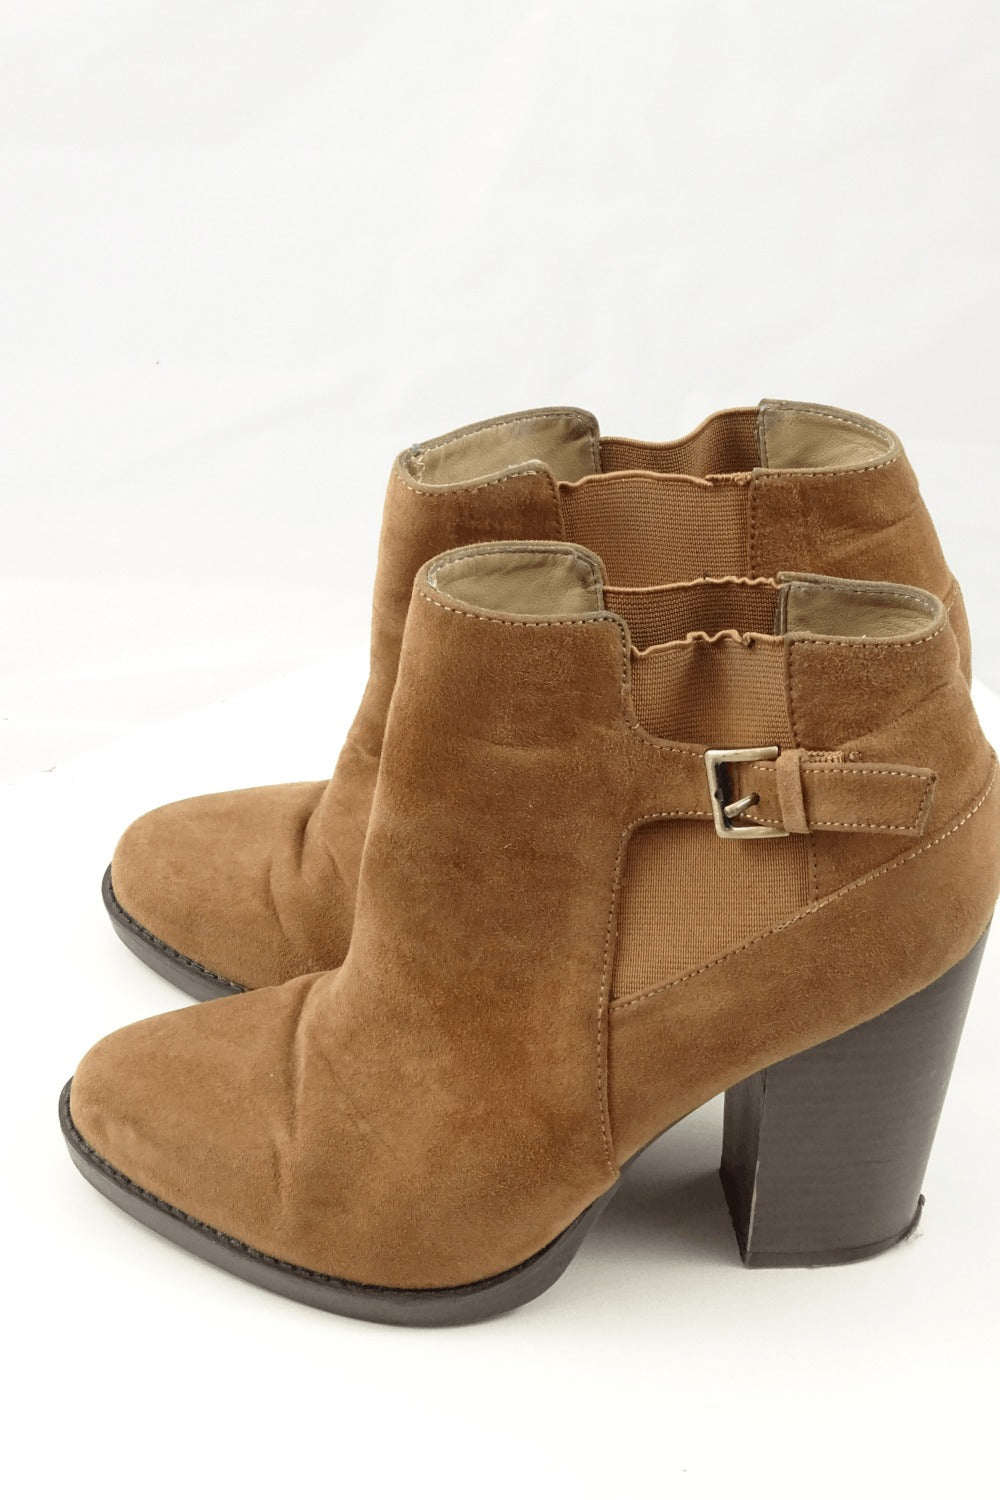 Zara camel boots